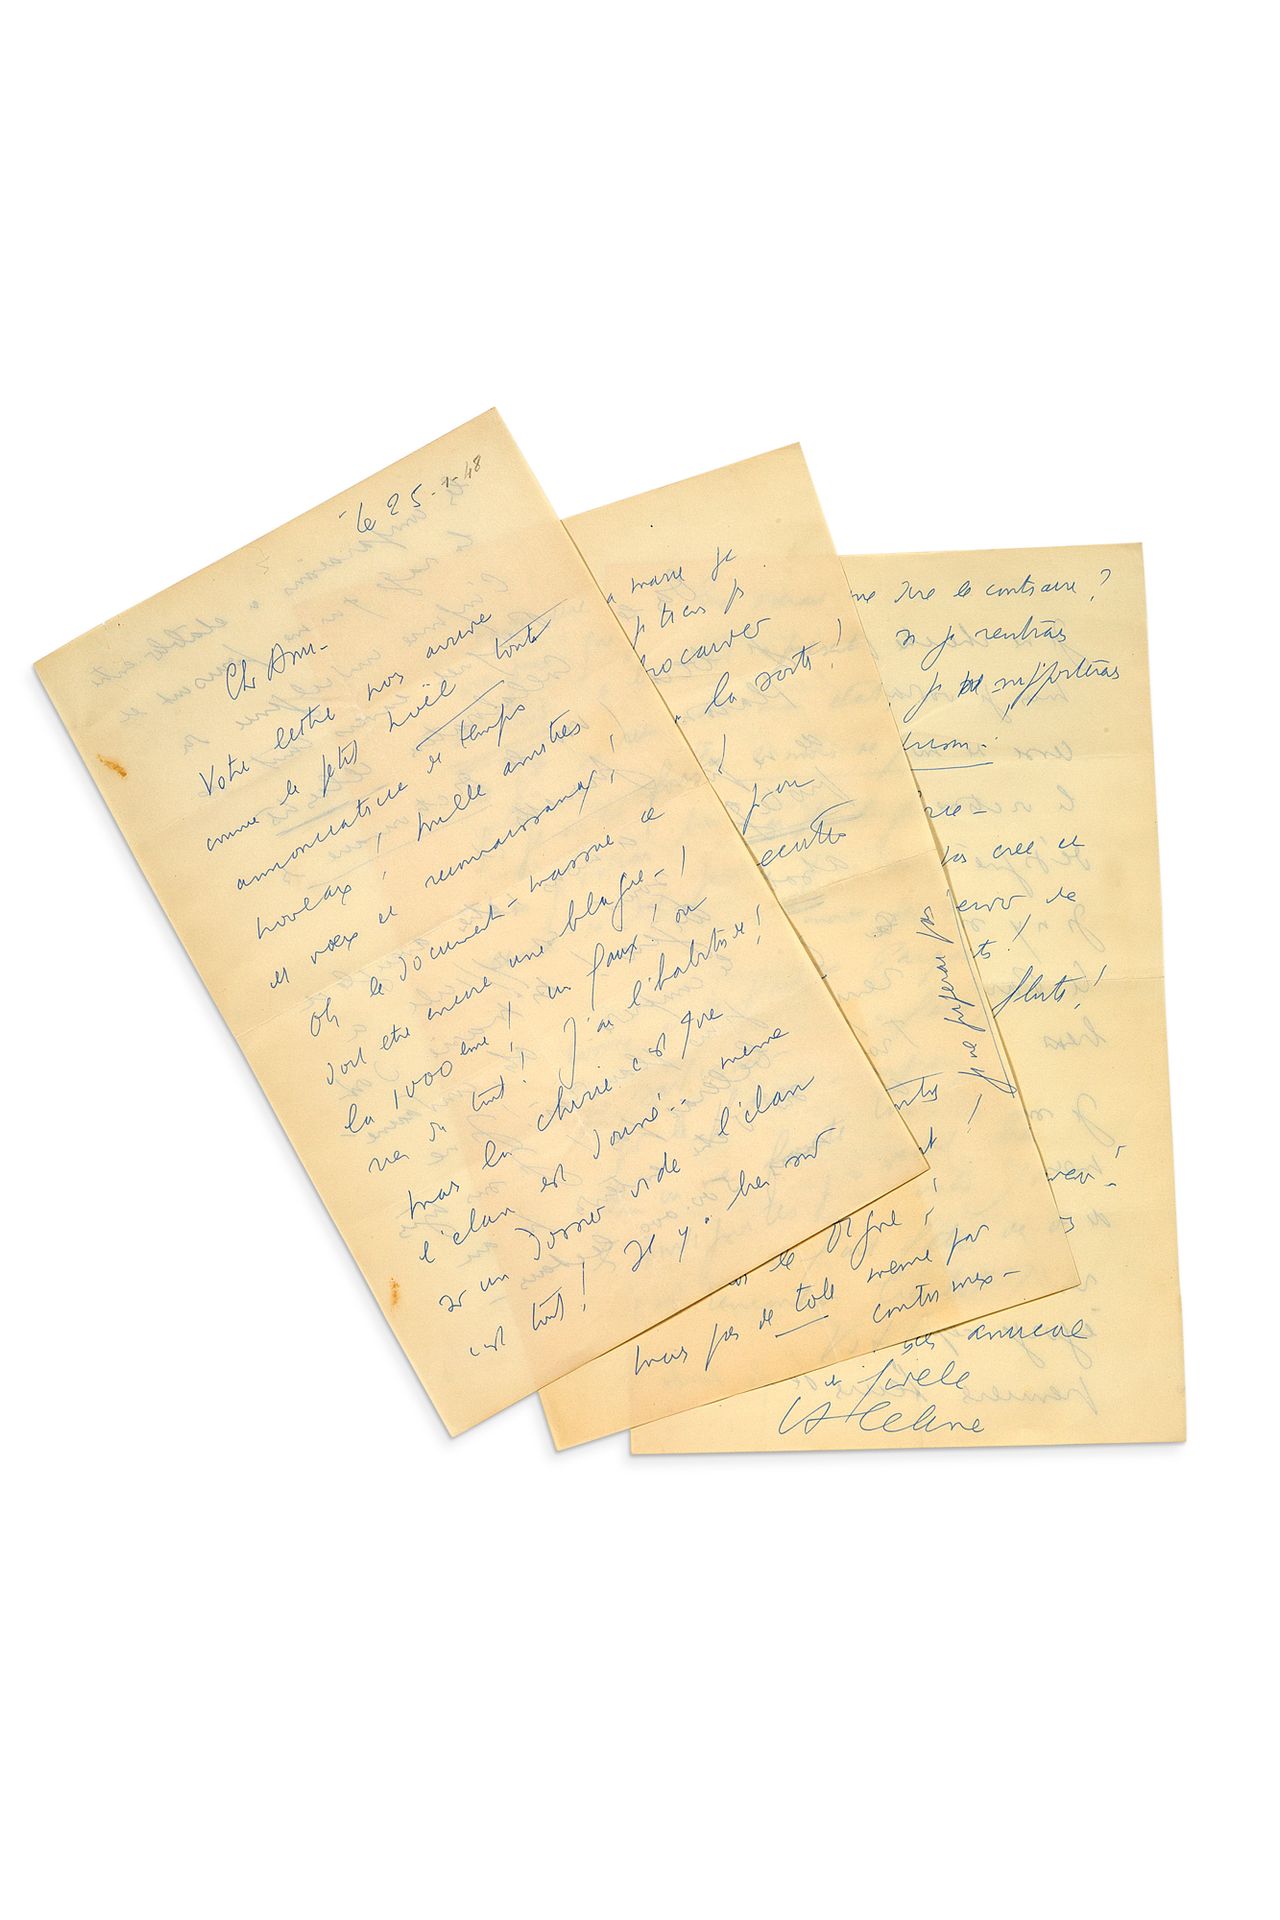 CELINE LOUIS-FERDINAND (1894-1961) 签署给Paul MARTEAU的亲笔信。Korsör（丹麦），1948年1月25日。6页，&hellip;